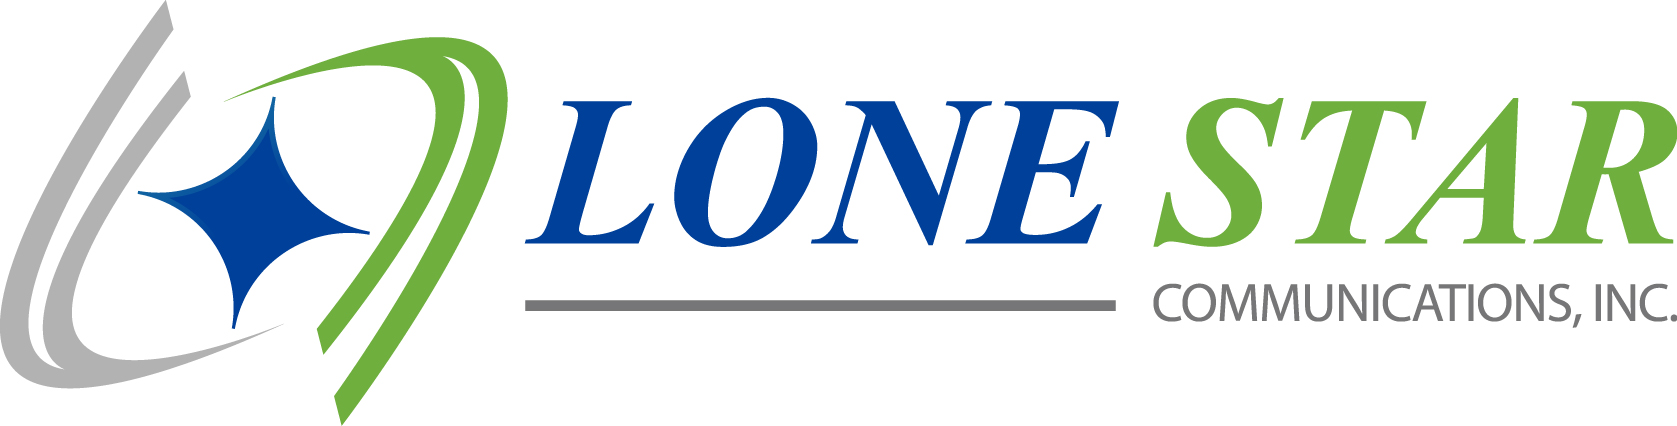 Lone Star Communications, Inc. Company Logo